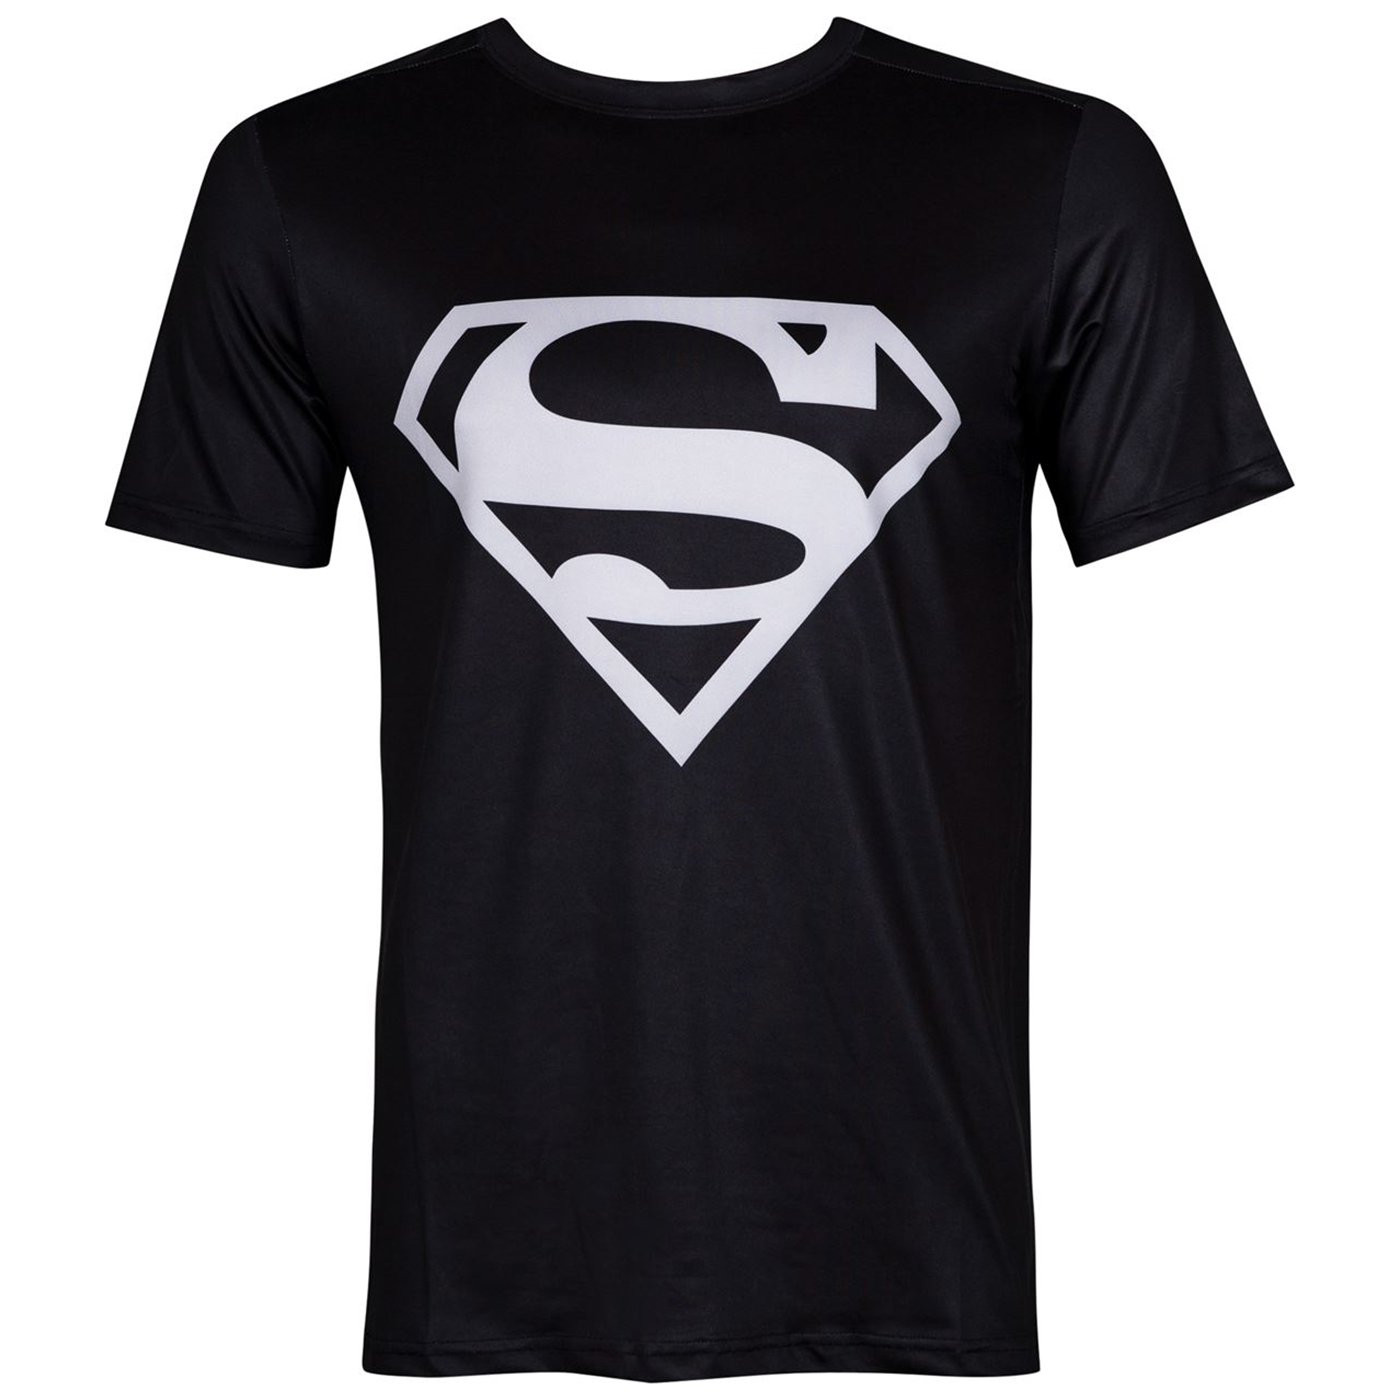 superman athletic shirt